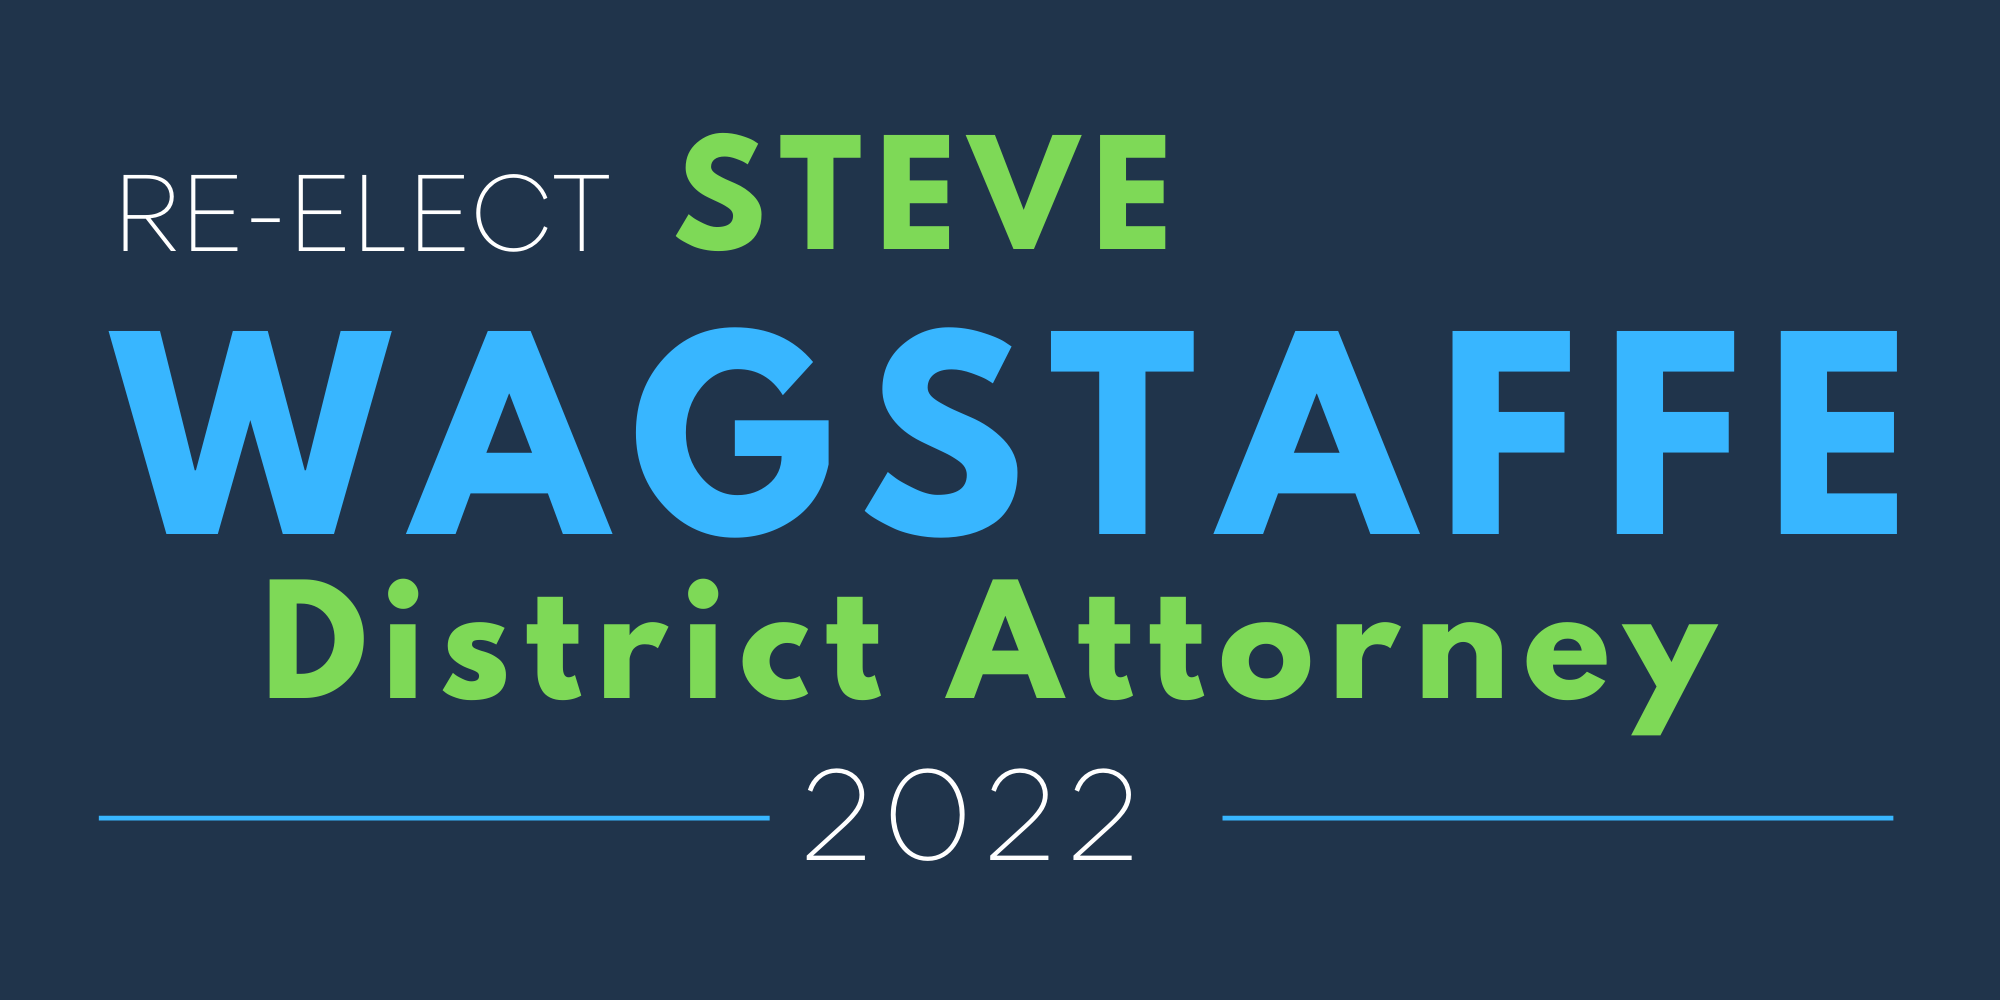 Steve Wagstaffe for District Attorney 2022 logo